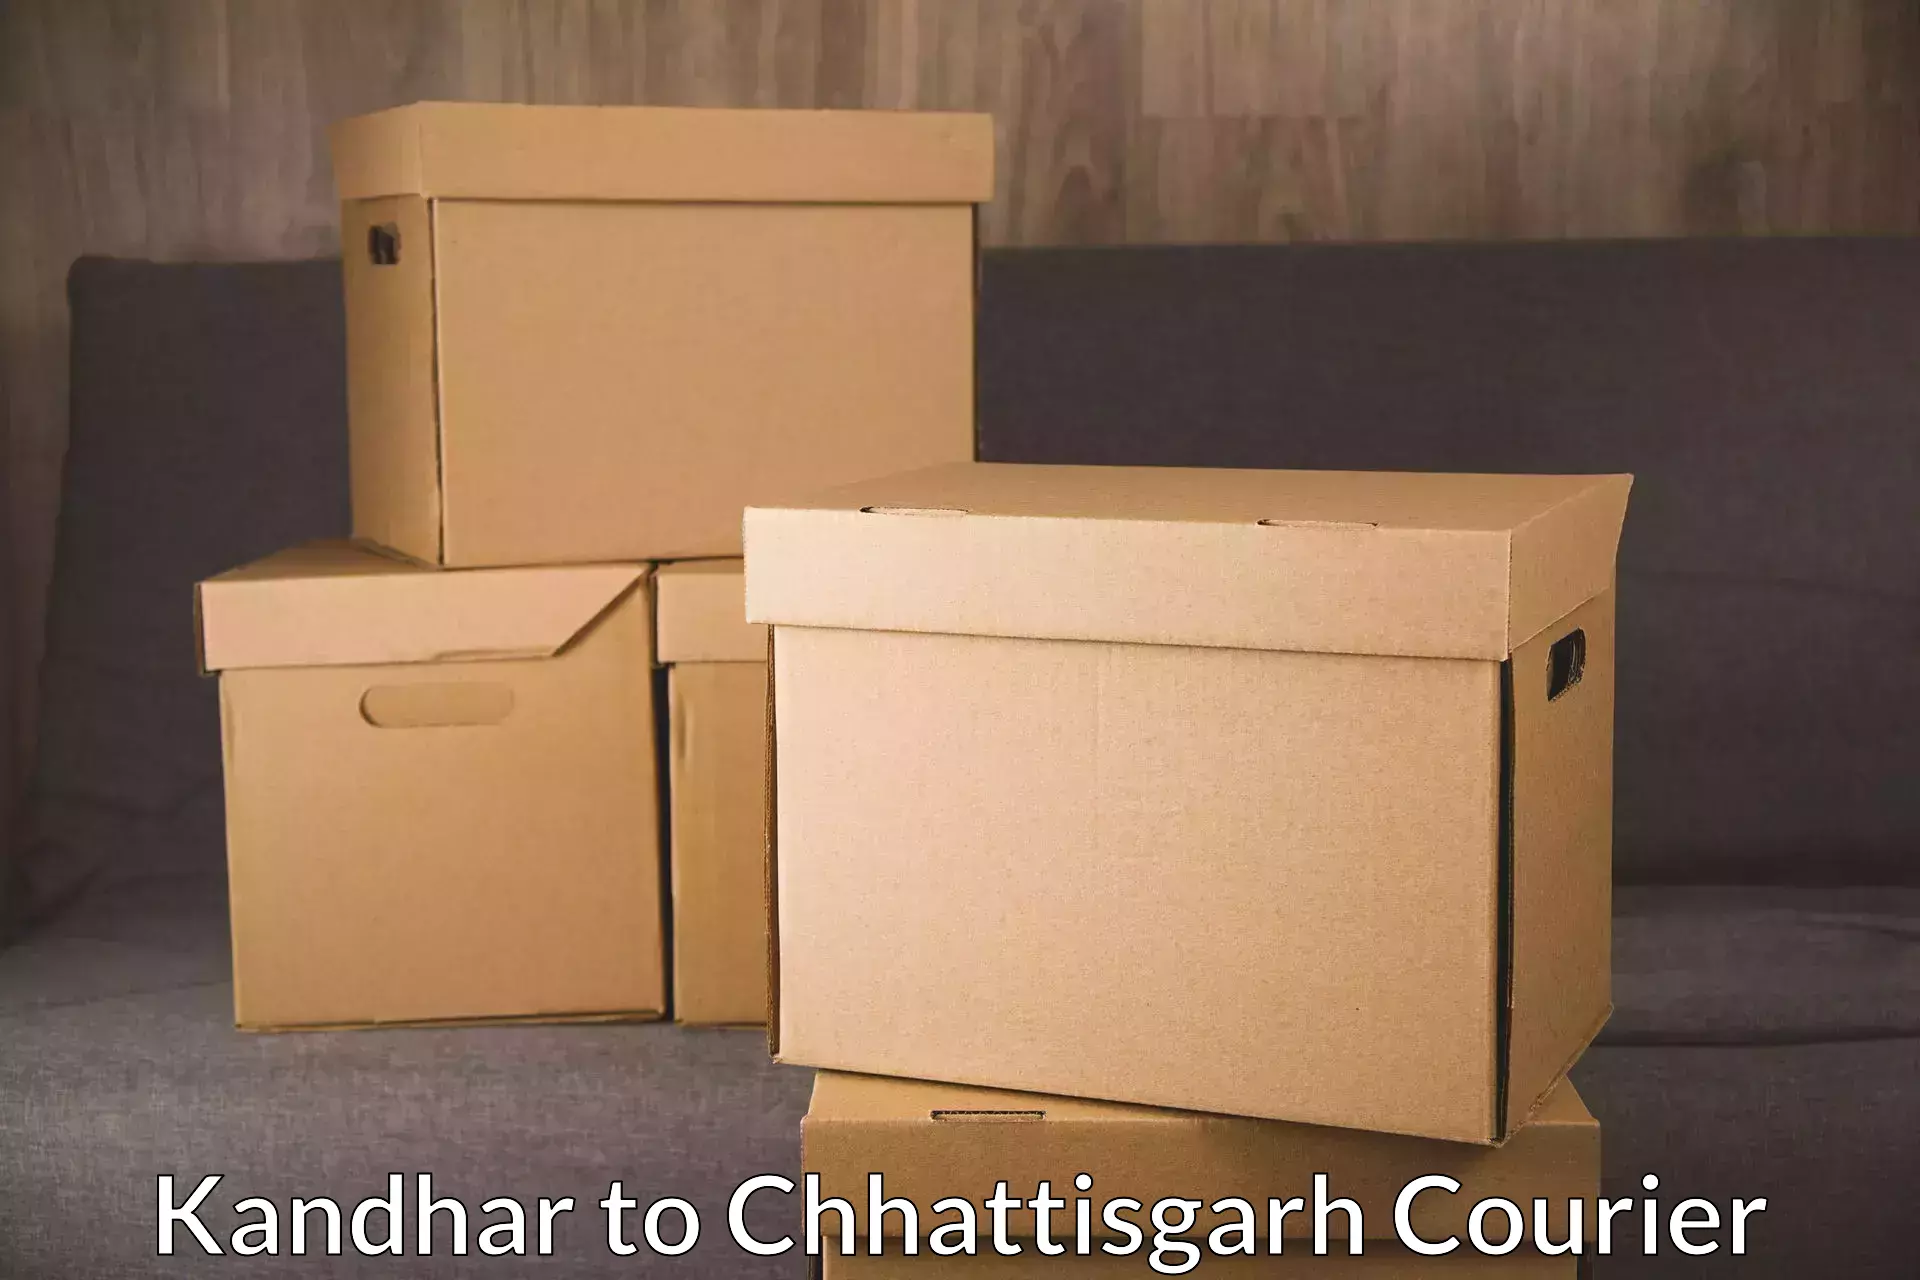 Express courier capabilities Kandhar to Korea Chhattisgarh